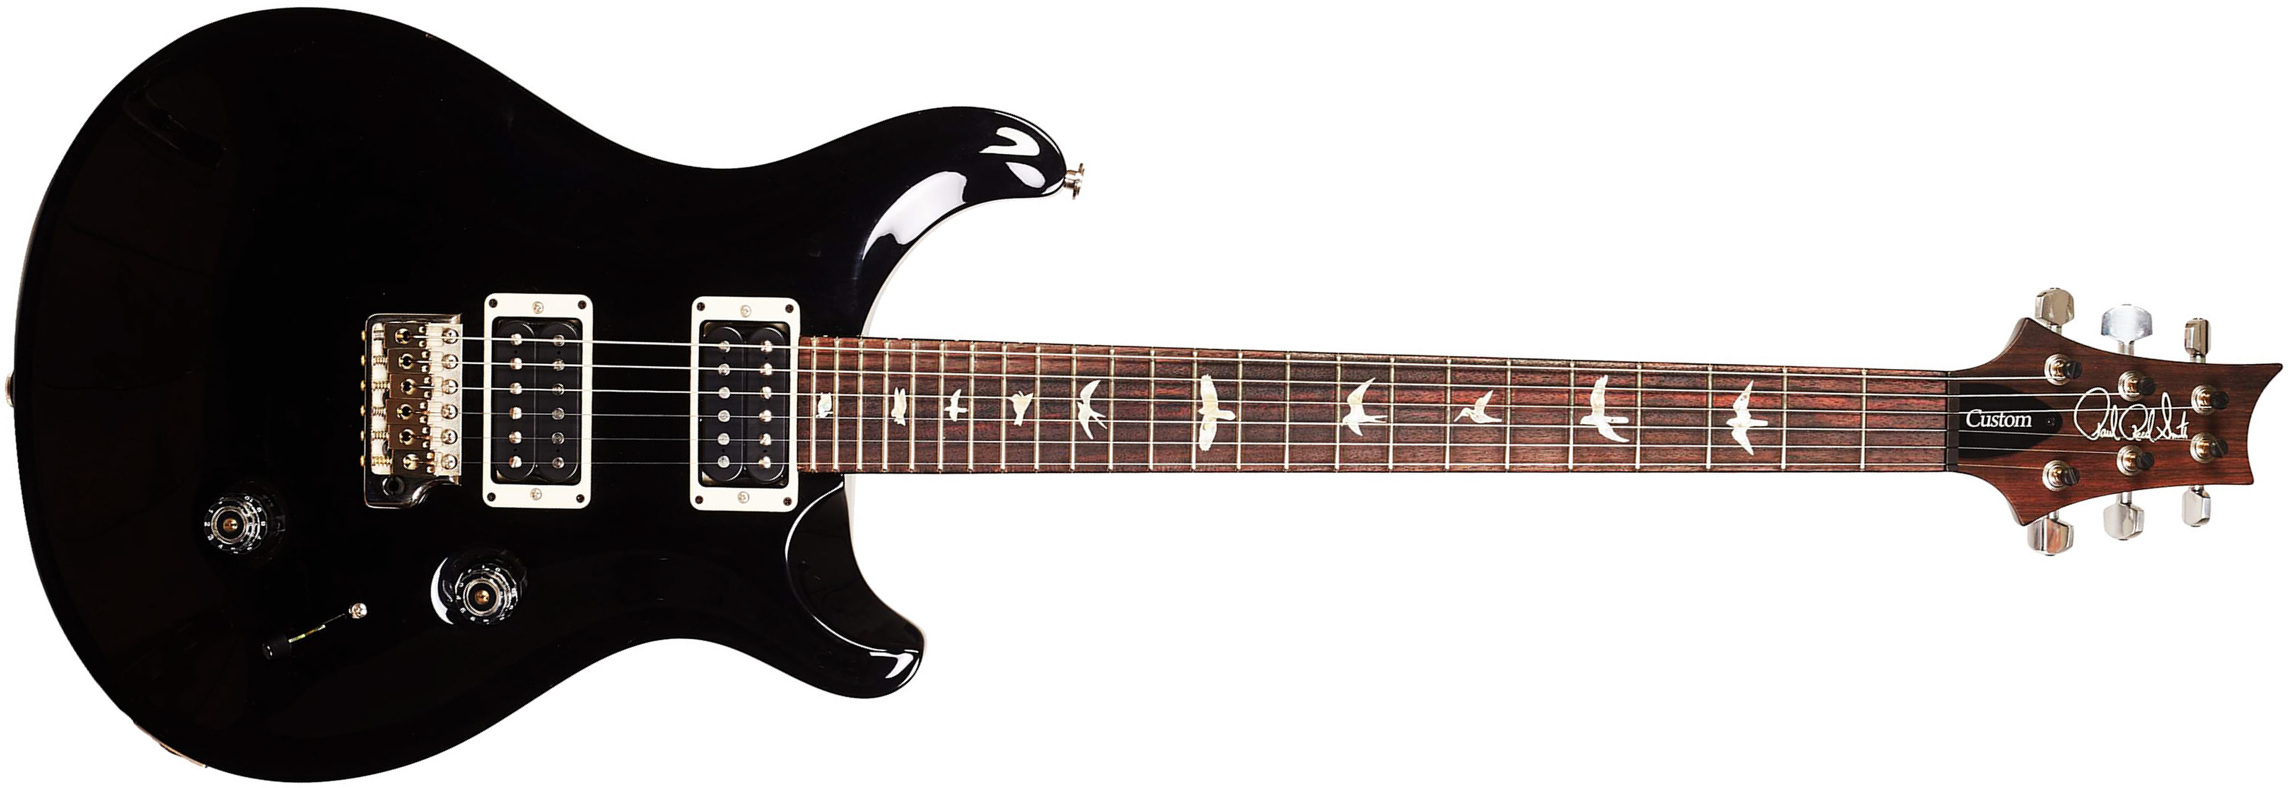 Prs Custom 24 Usa Hh Trem Rw - Black - Double cut electric guitar - Main picture